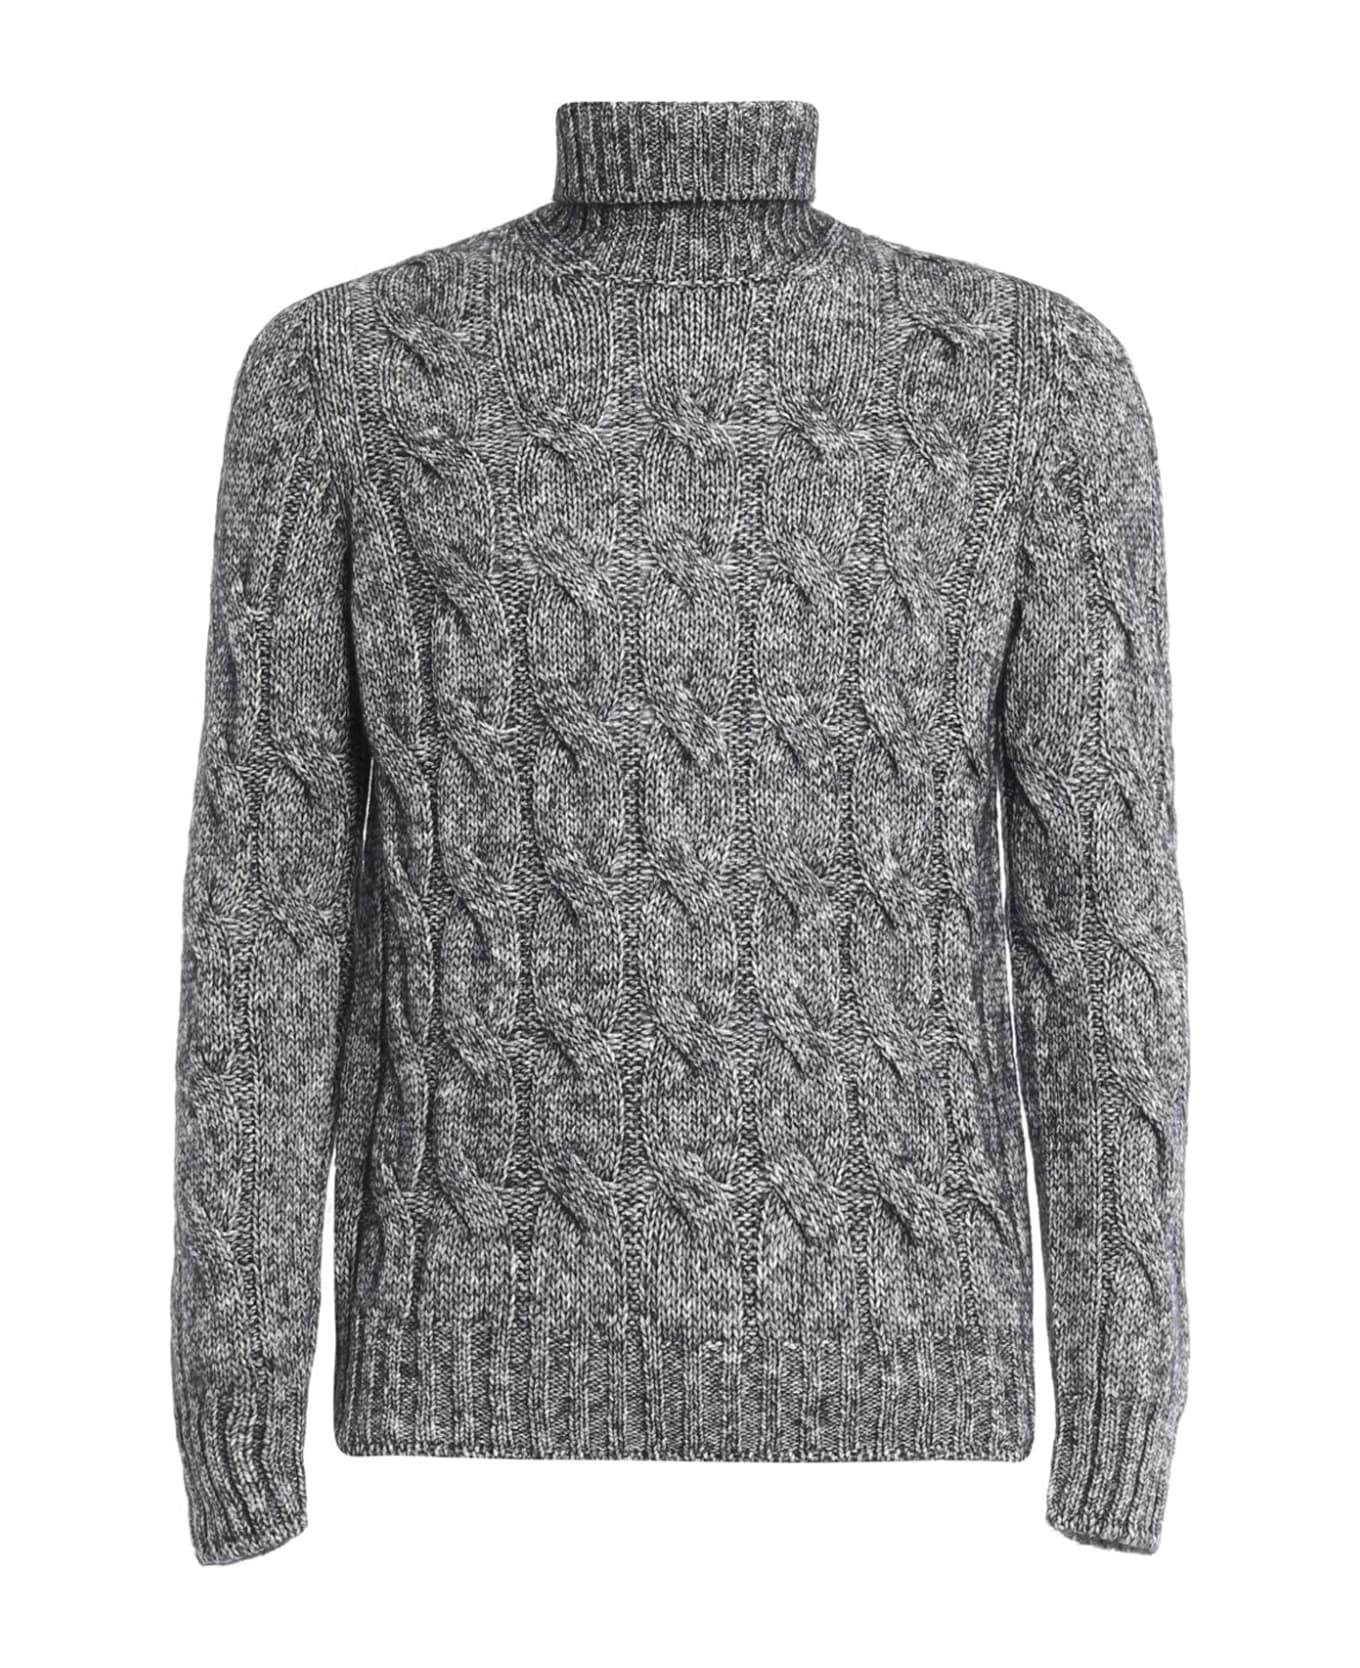 Saint Laurent Turtleneck Sweater - Silver